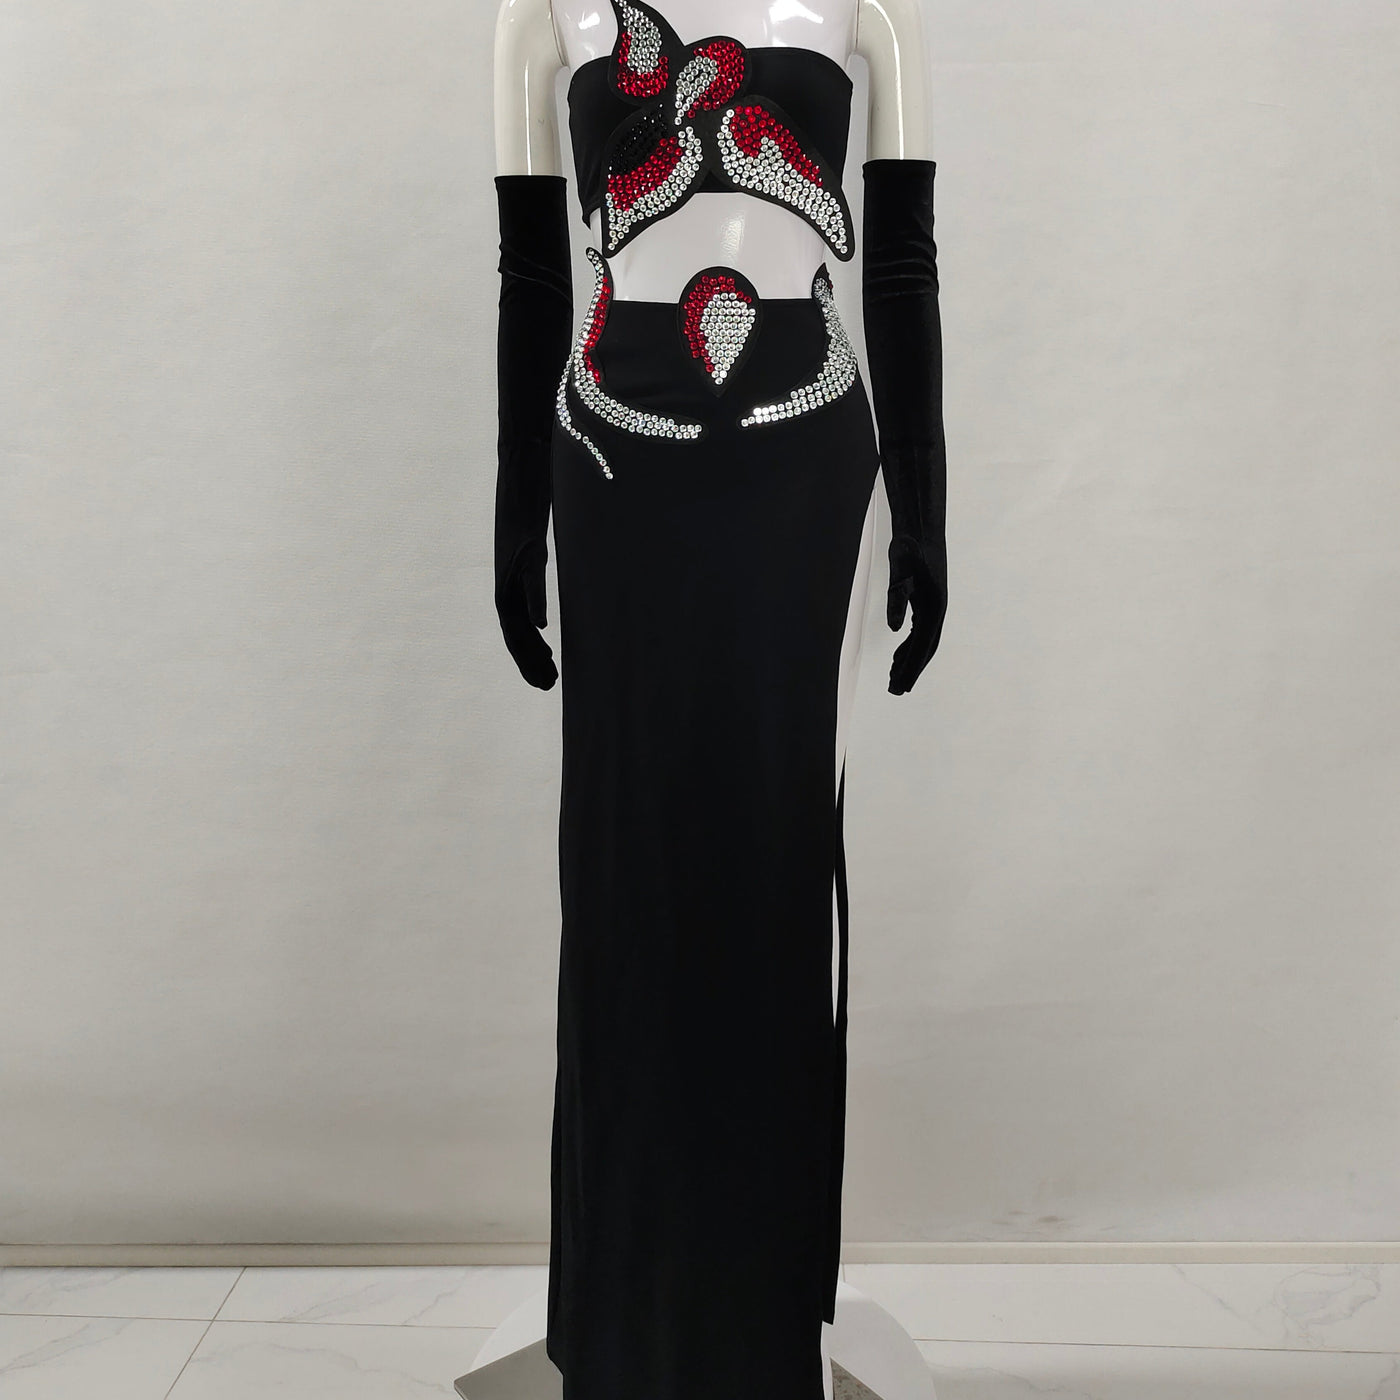 Nelle Strapless Stone Embellished Tube Top & High Slit Maxi Skirt Set - Hot fashionista